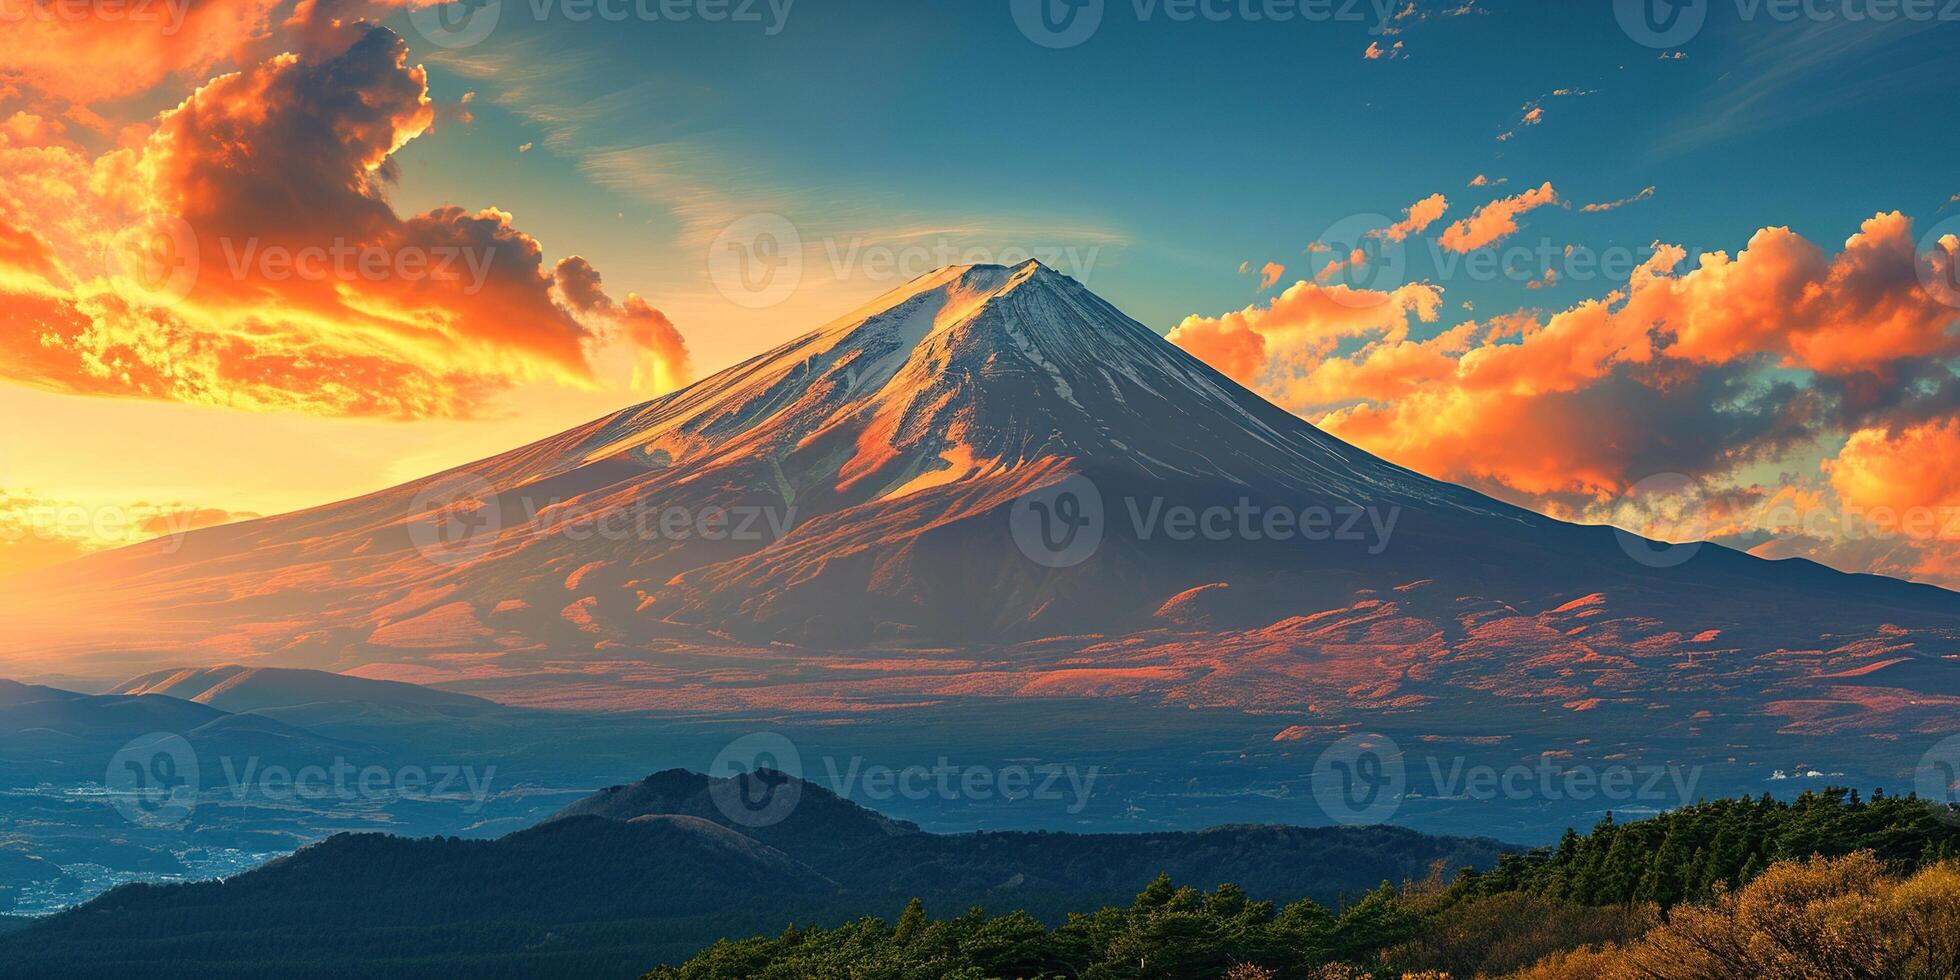 AI generated Mt. Fuji, mount Fuji-san tallest volcano mountain in Tokyo, Japan. Snow capped peak, conical sacred symbol, purple, orange sunset nature landscape backdrop background wallpaper, travel photo